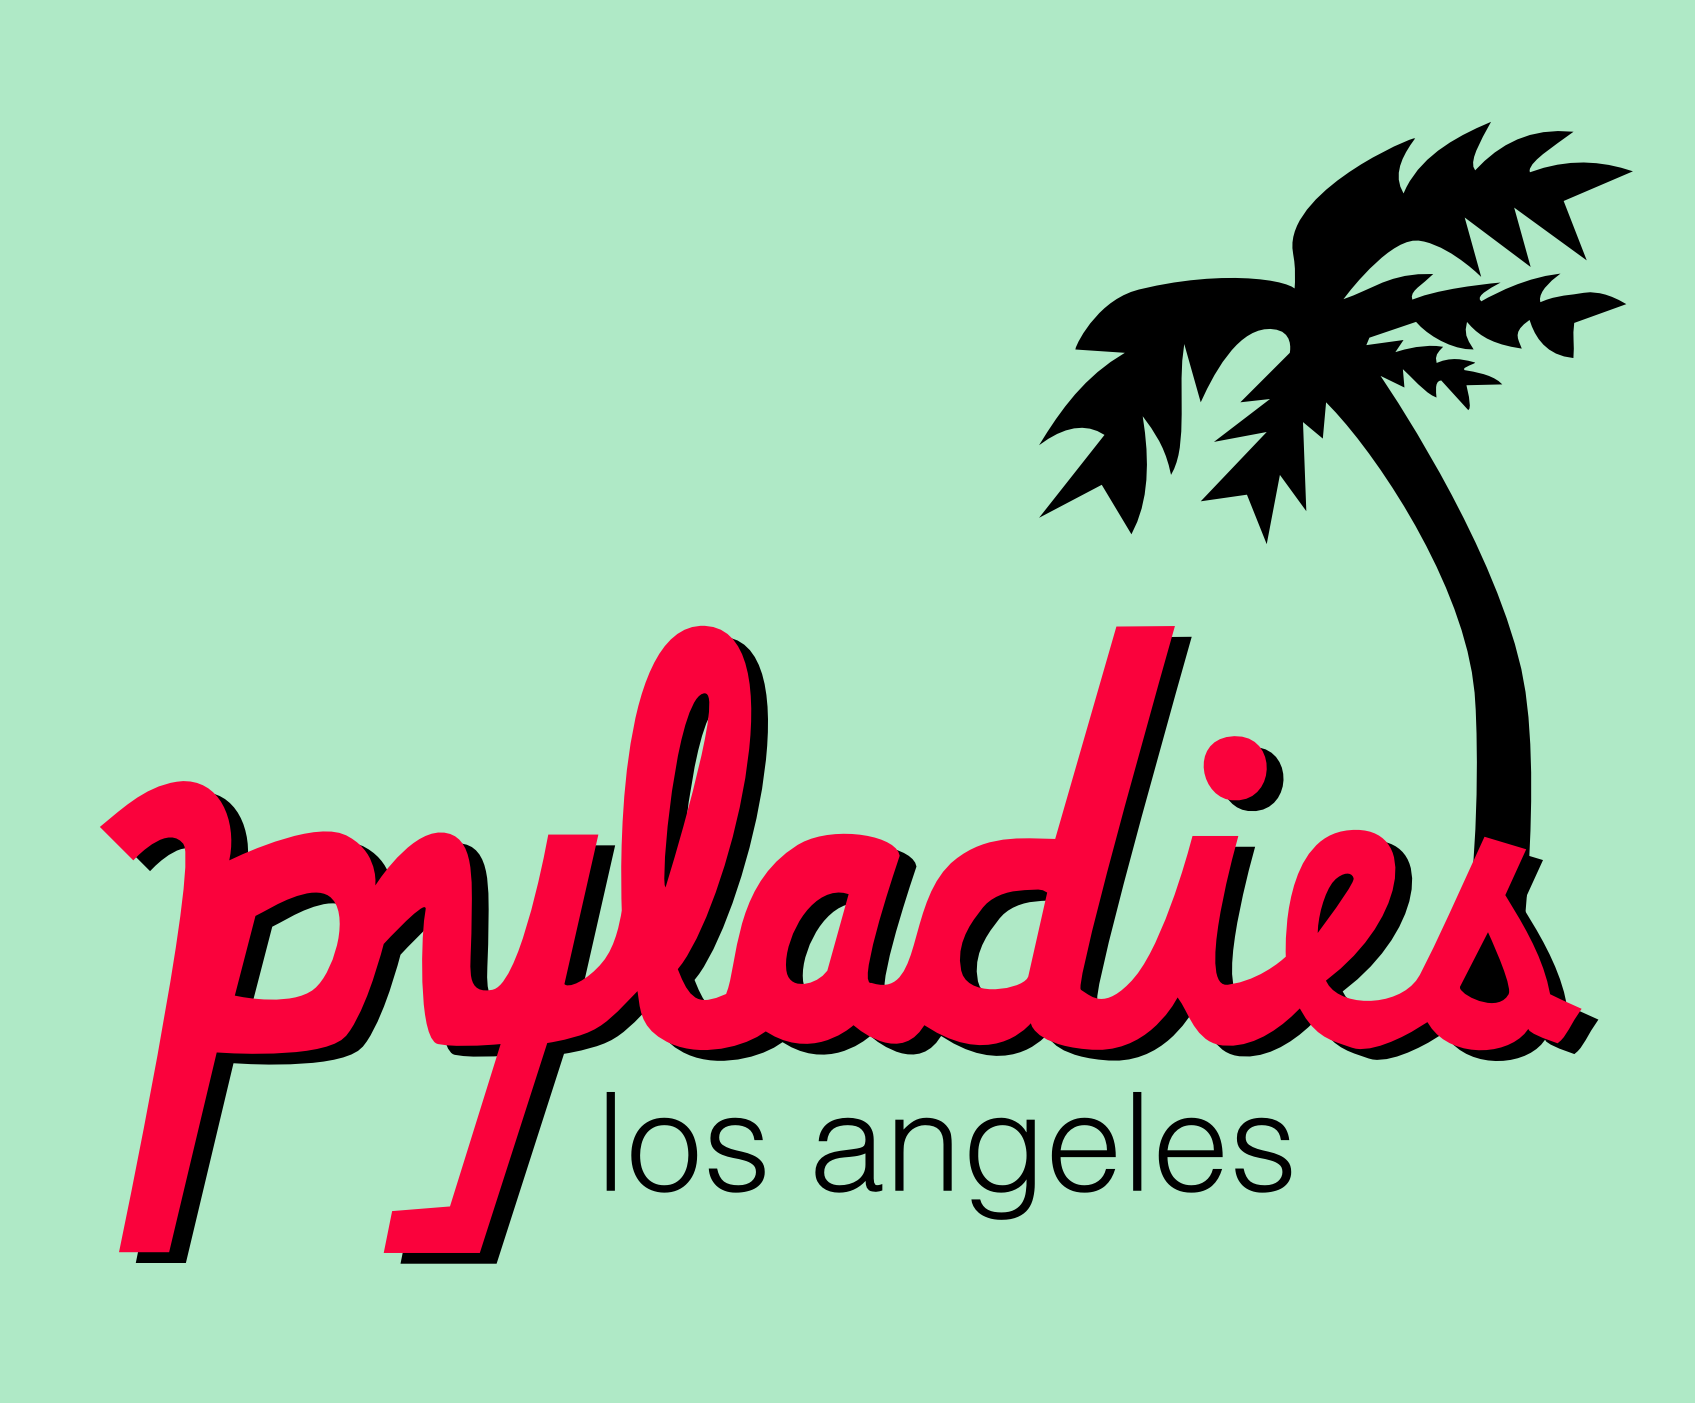 pyladies_la_logo.png